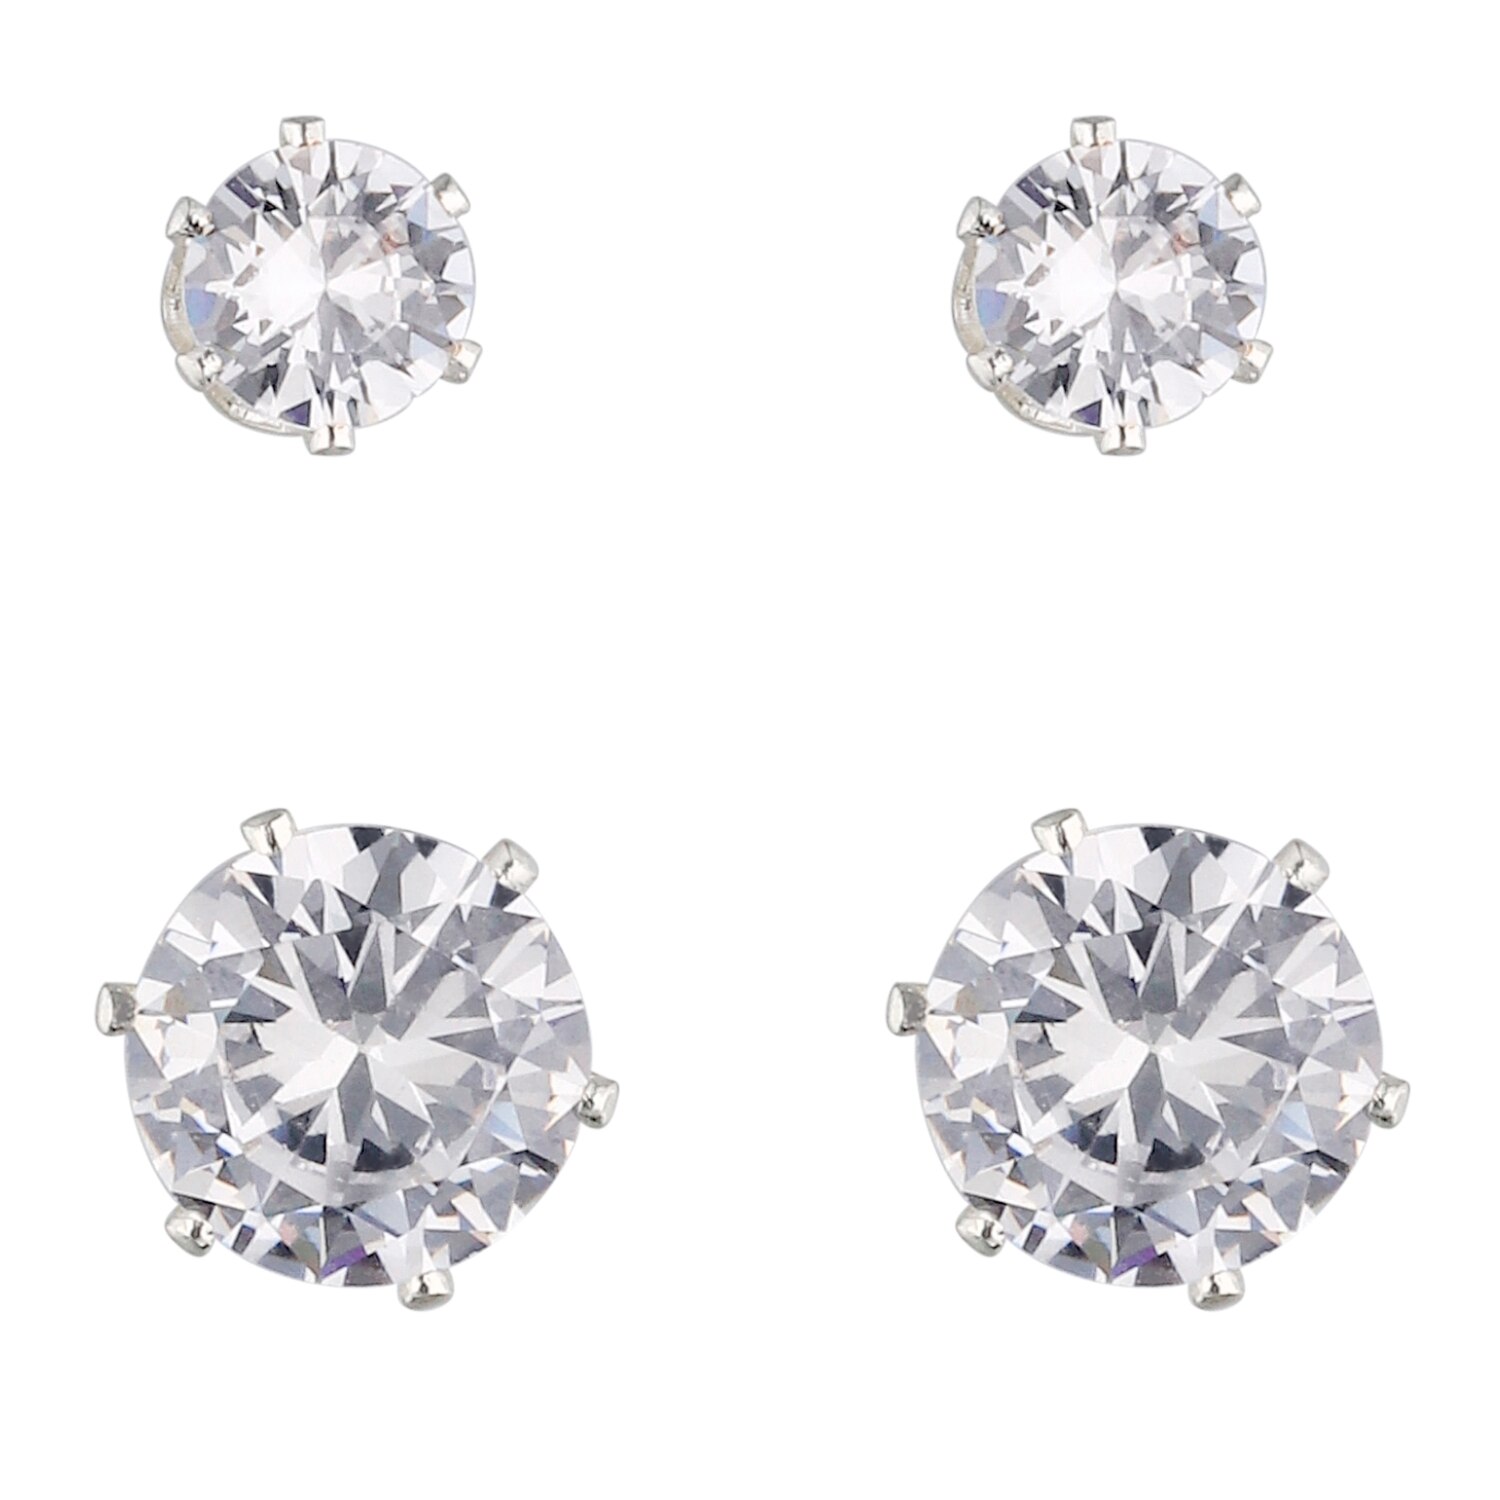 I AM Jewelry Elegant Silver Earring Set, 4CT , CVS